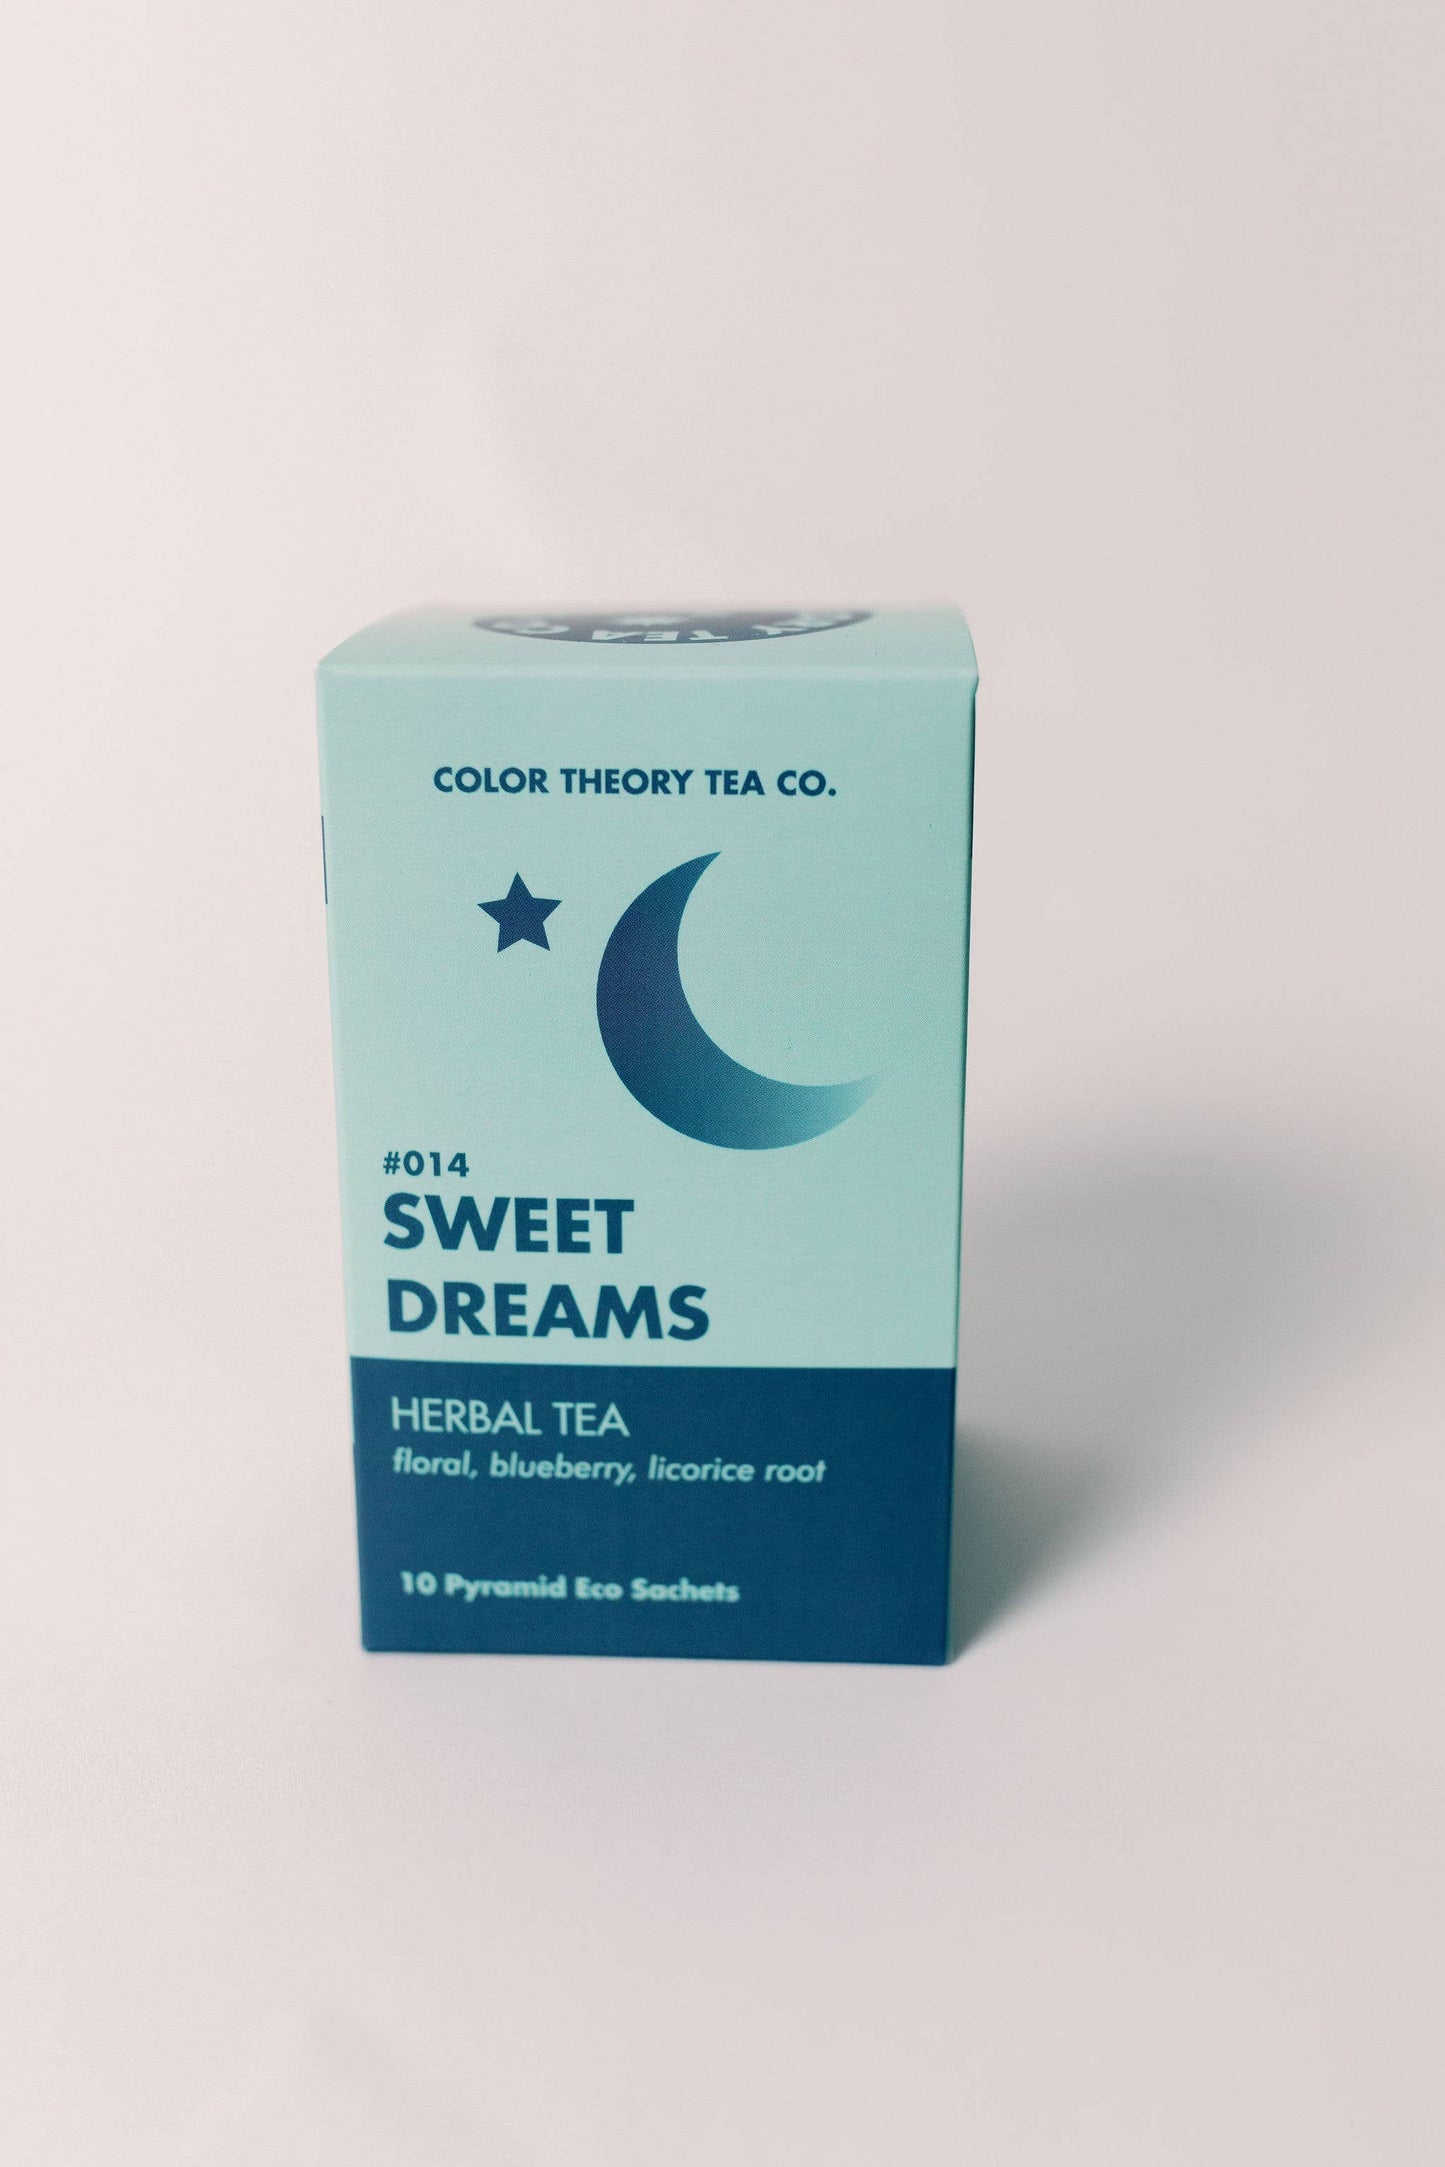 Sweet Dreams: Color Theory Tea Co.